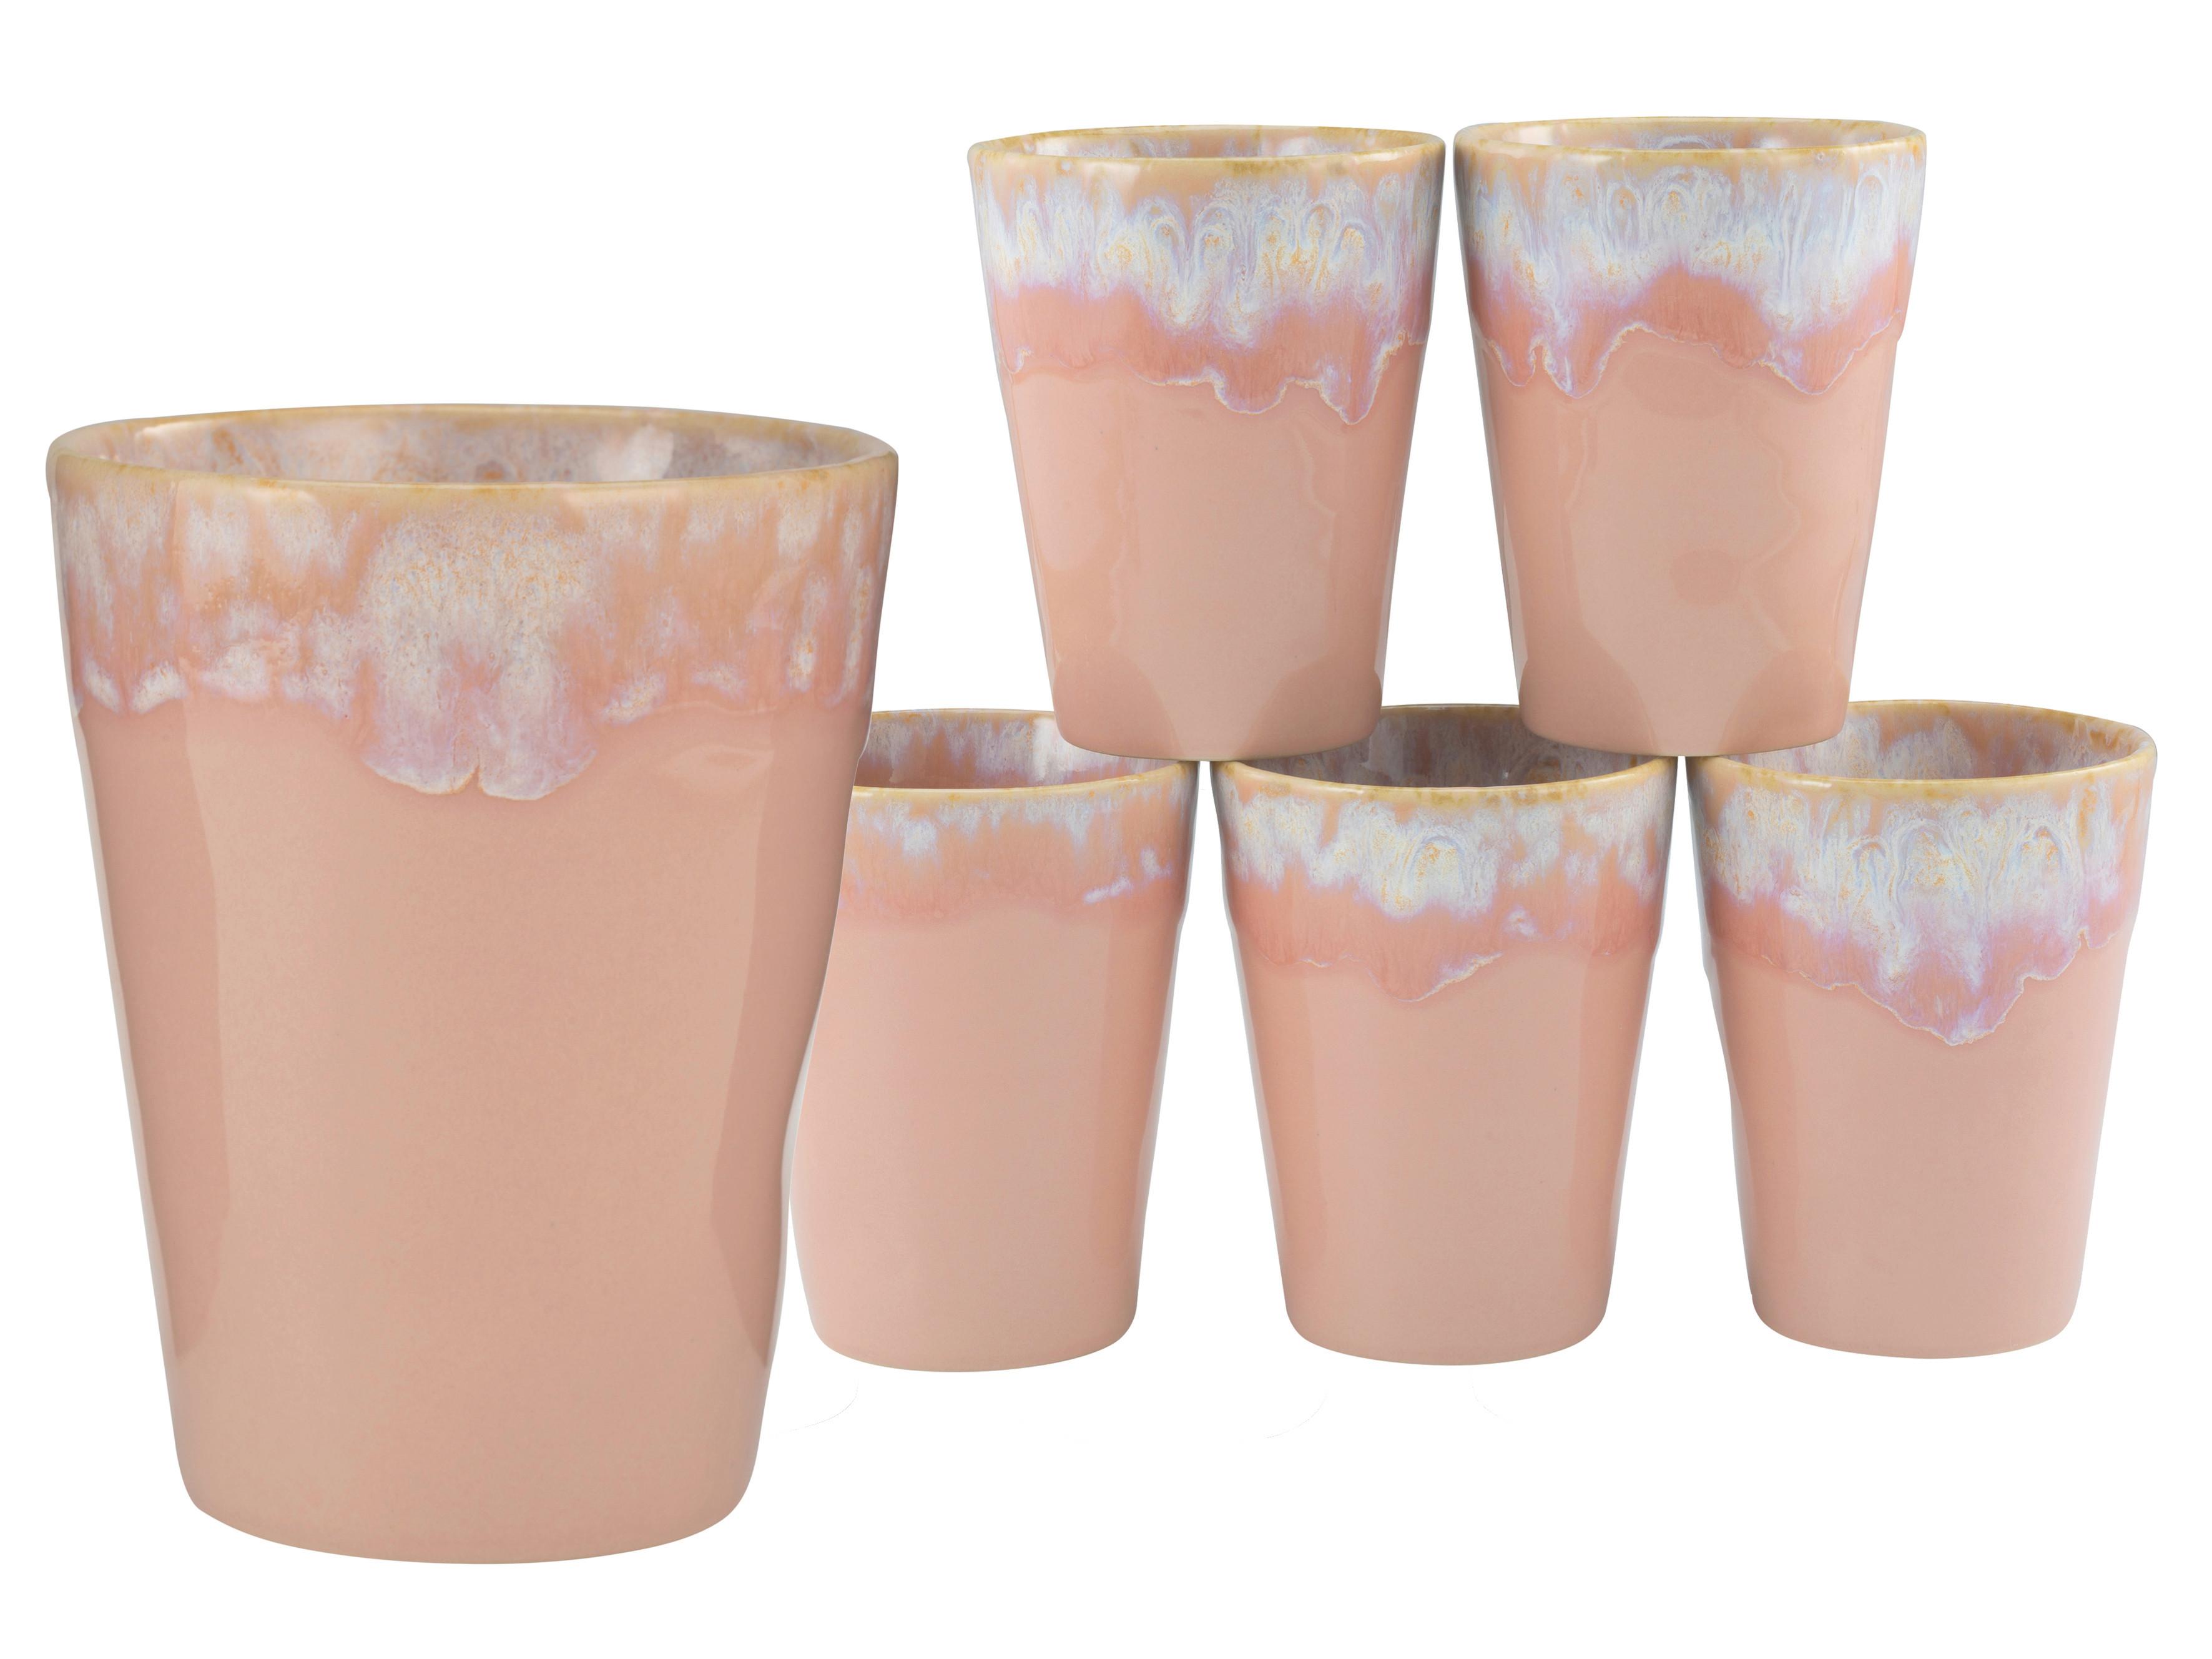 KOMPLET FILIŻANEK GRESPRESSO ROSE 23731 - różowy, Basics, ceramika (32/19,5/26cm) - Creatable